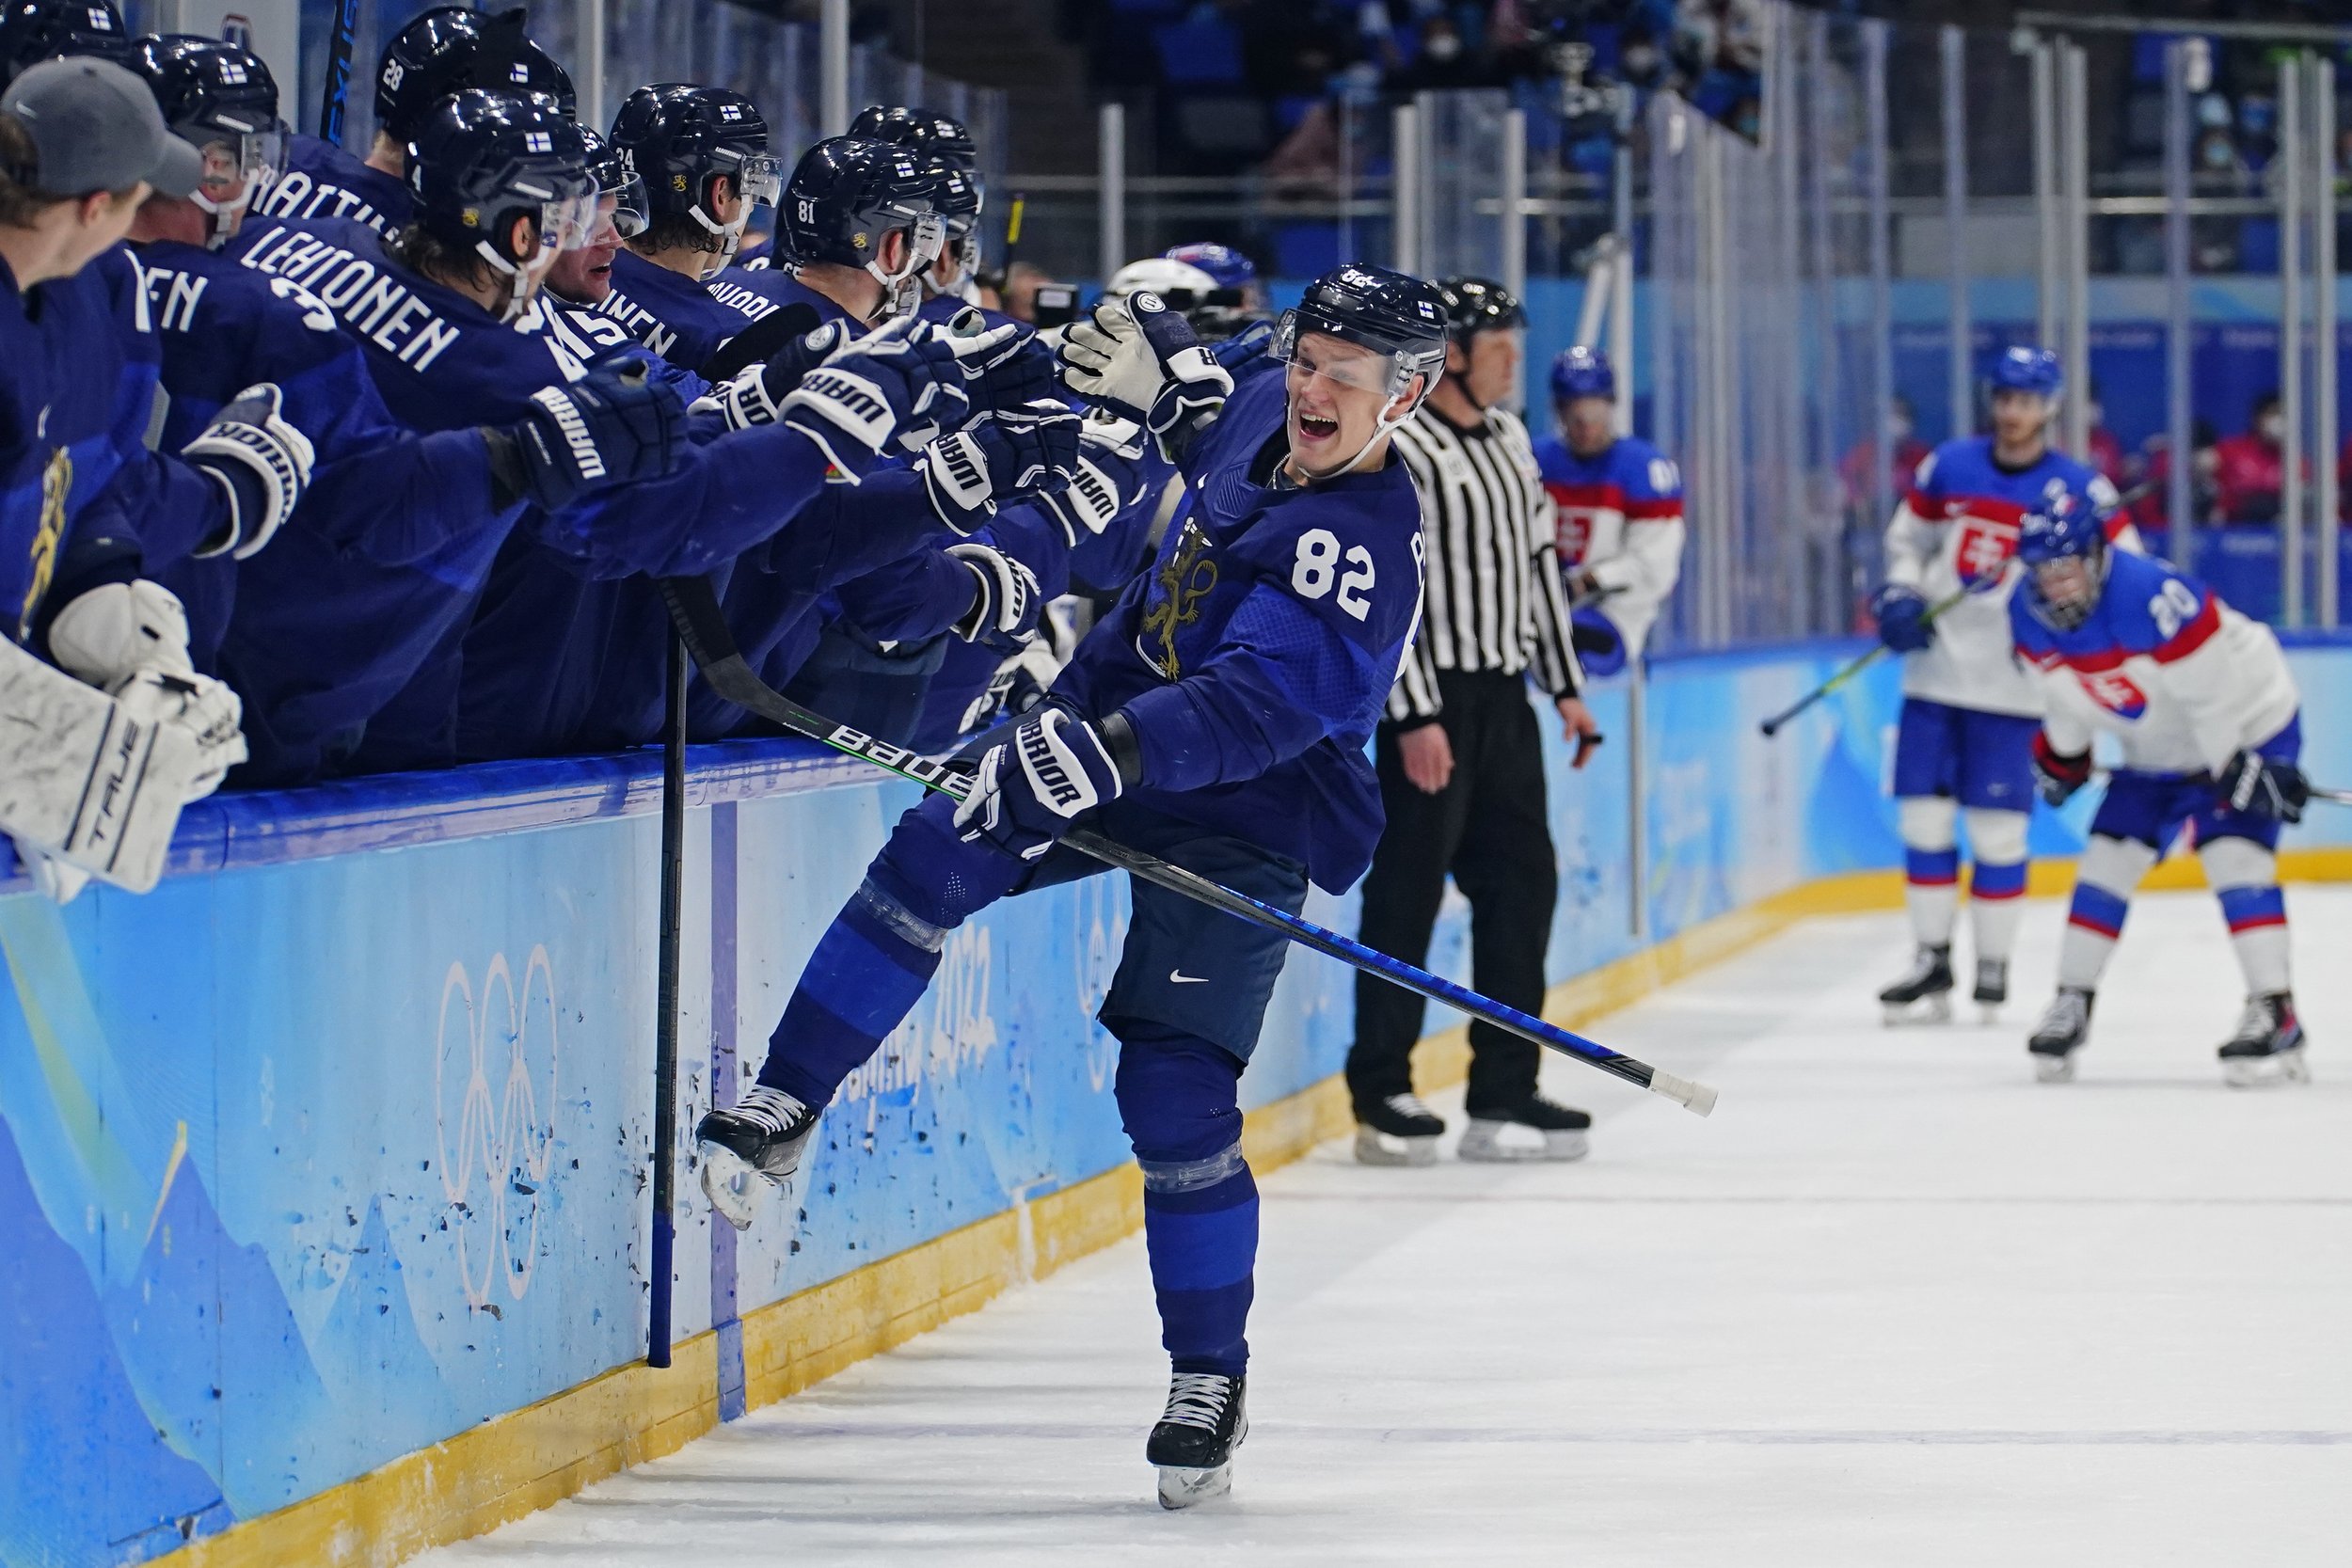  Finland's Harri Pesonen (82) celebrates after scoring a goal against Slovakia during a men's semifinal hockey game at the 2022 Winter Olympics, Friday, Feb. 18, 2022, in Beijing. Finland won 2-0. (AP Photo/Matt Slocum) 